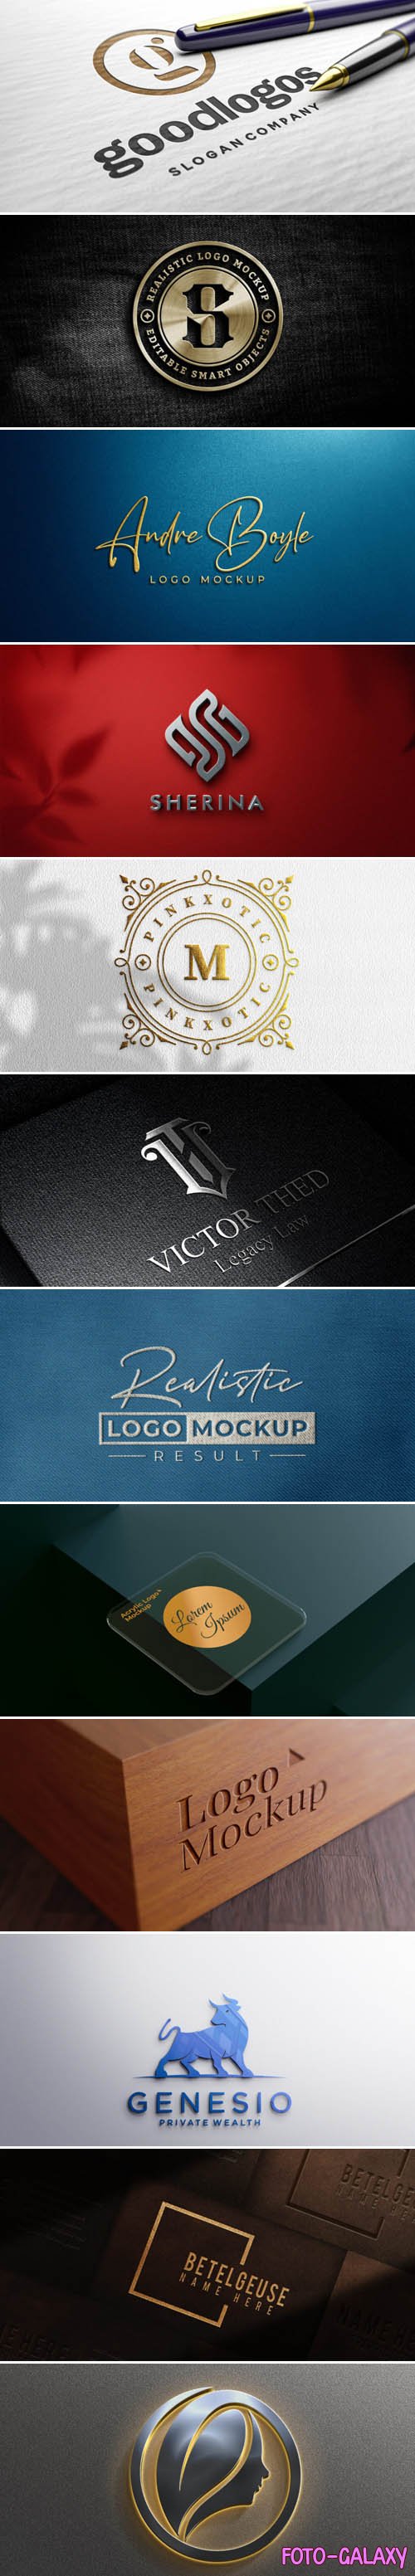 10+ New Luxury Logos PSD Mockups Templates